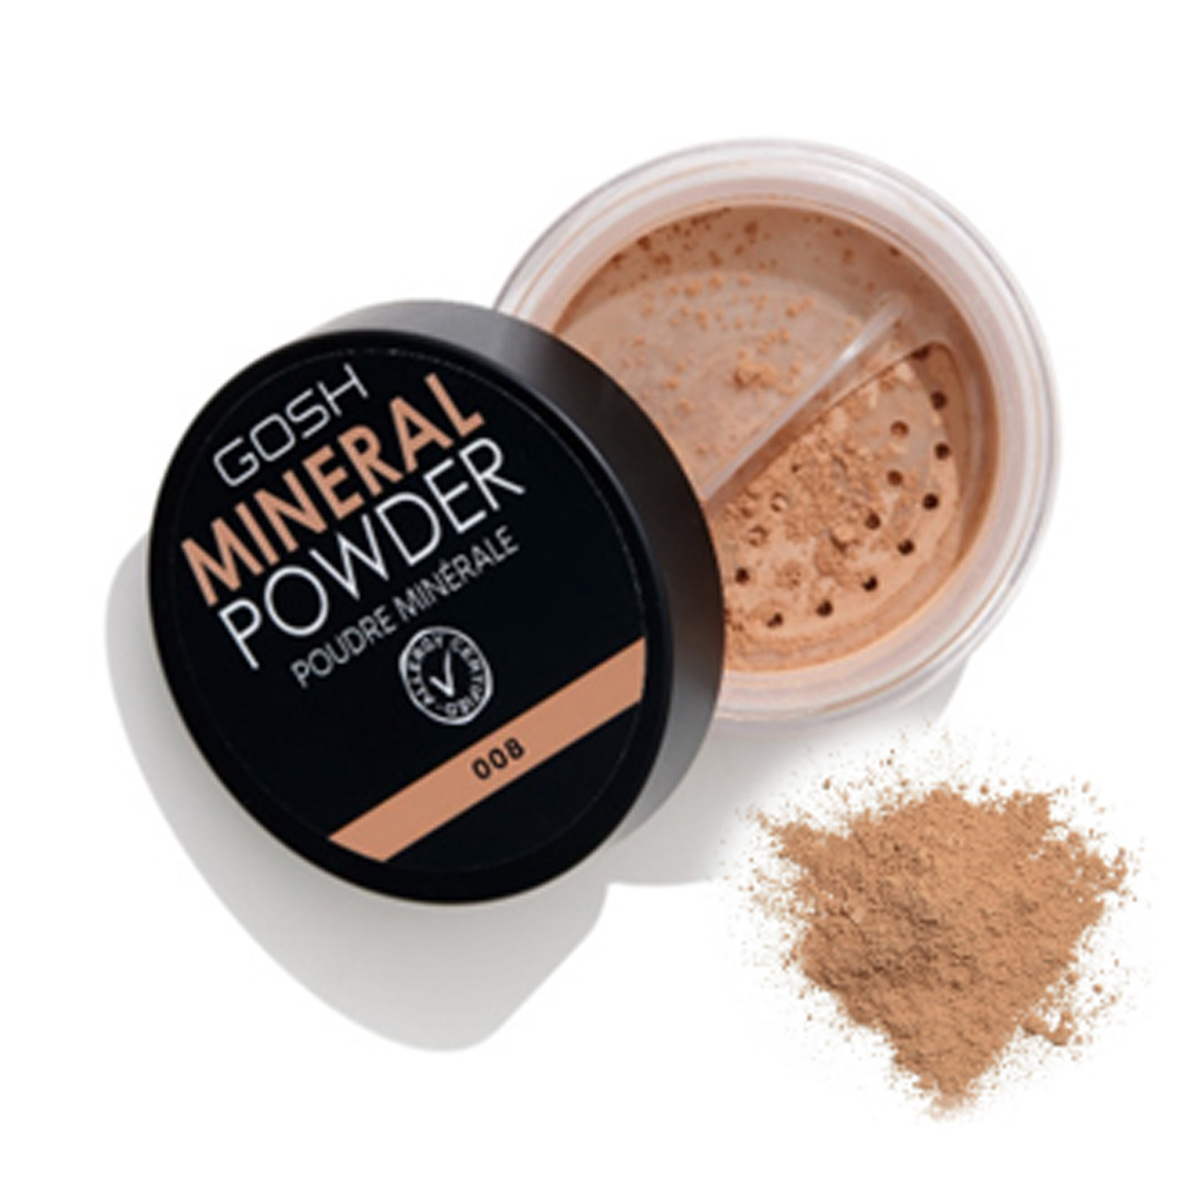 Gosh Mineral Powder Tan 008 1 pc